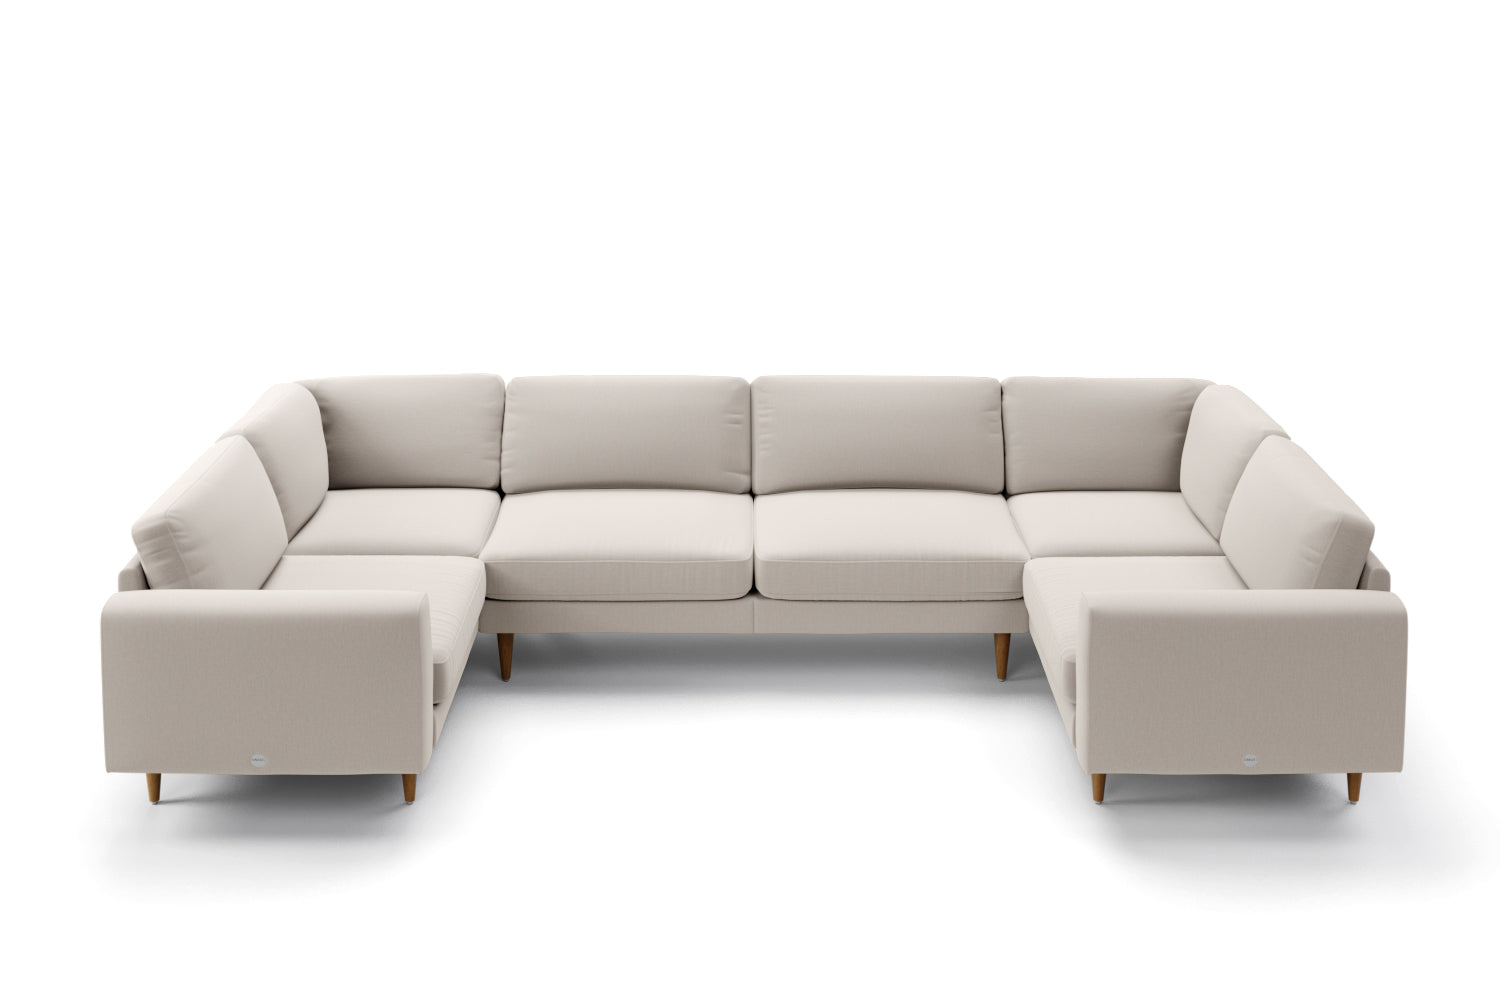 SNUG | The Big Chill Corner Sofa Large in Biscuit